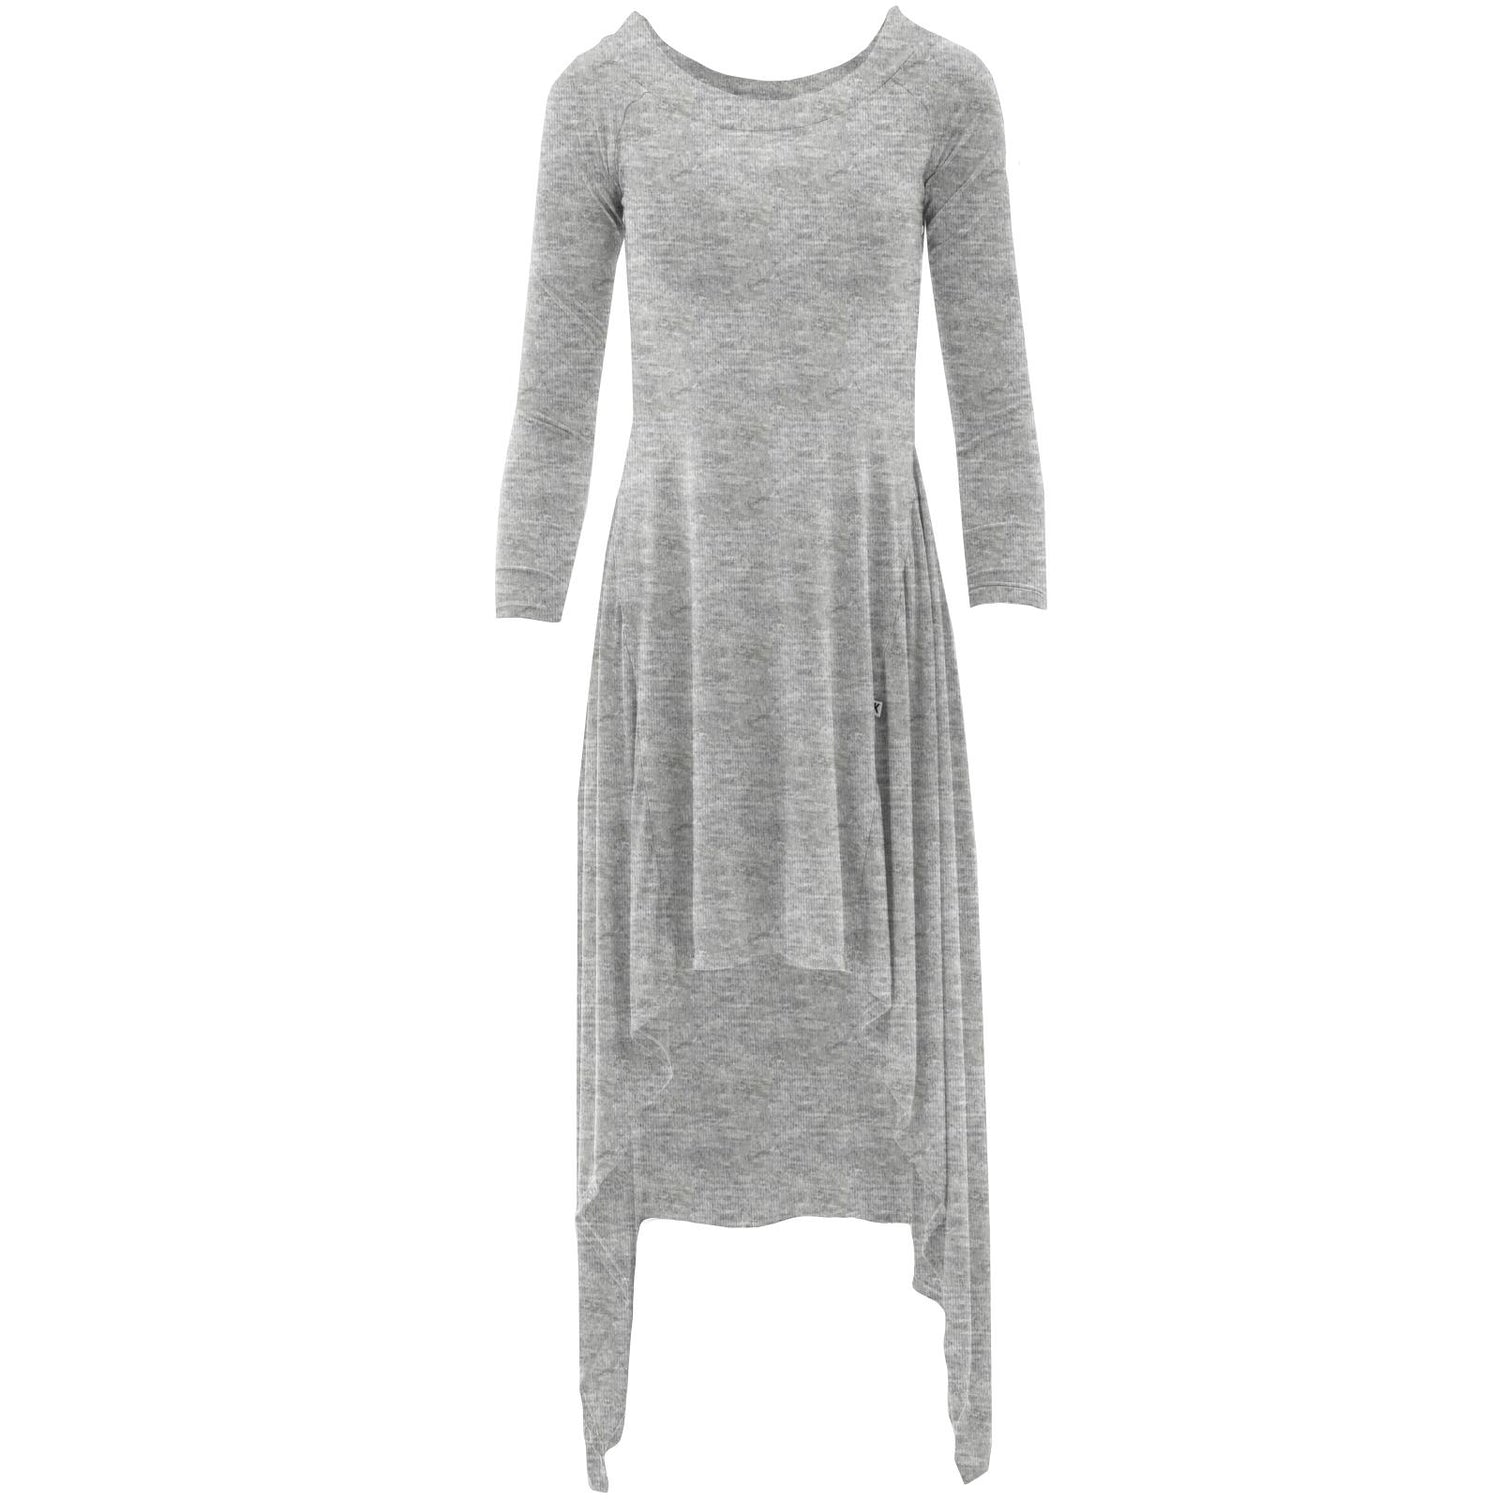 Women's Long Sleeve Hi Lo Raglan Dress in Heathered Mist